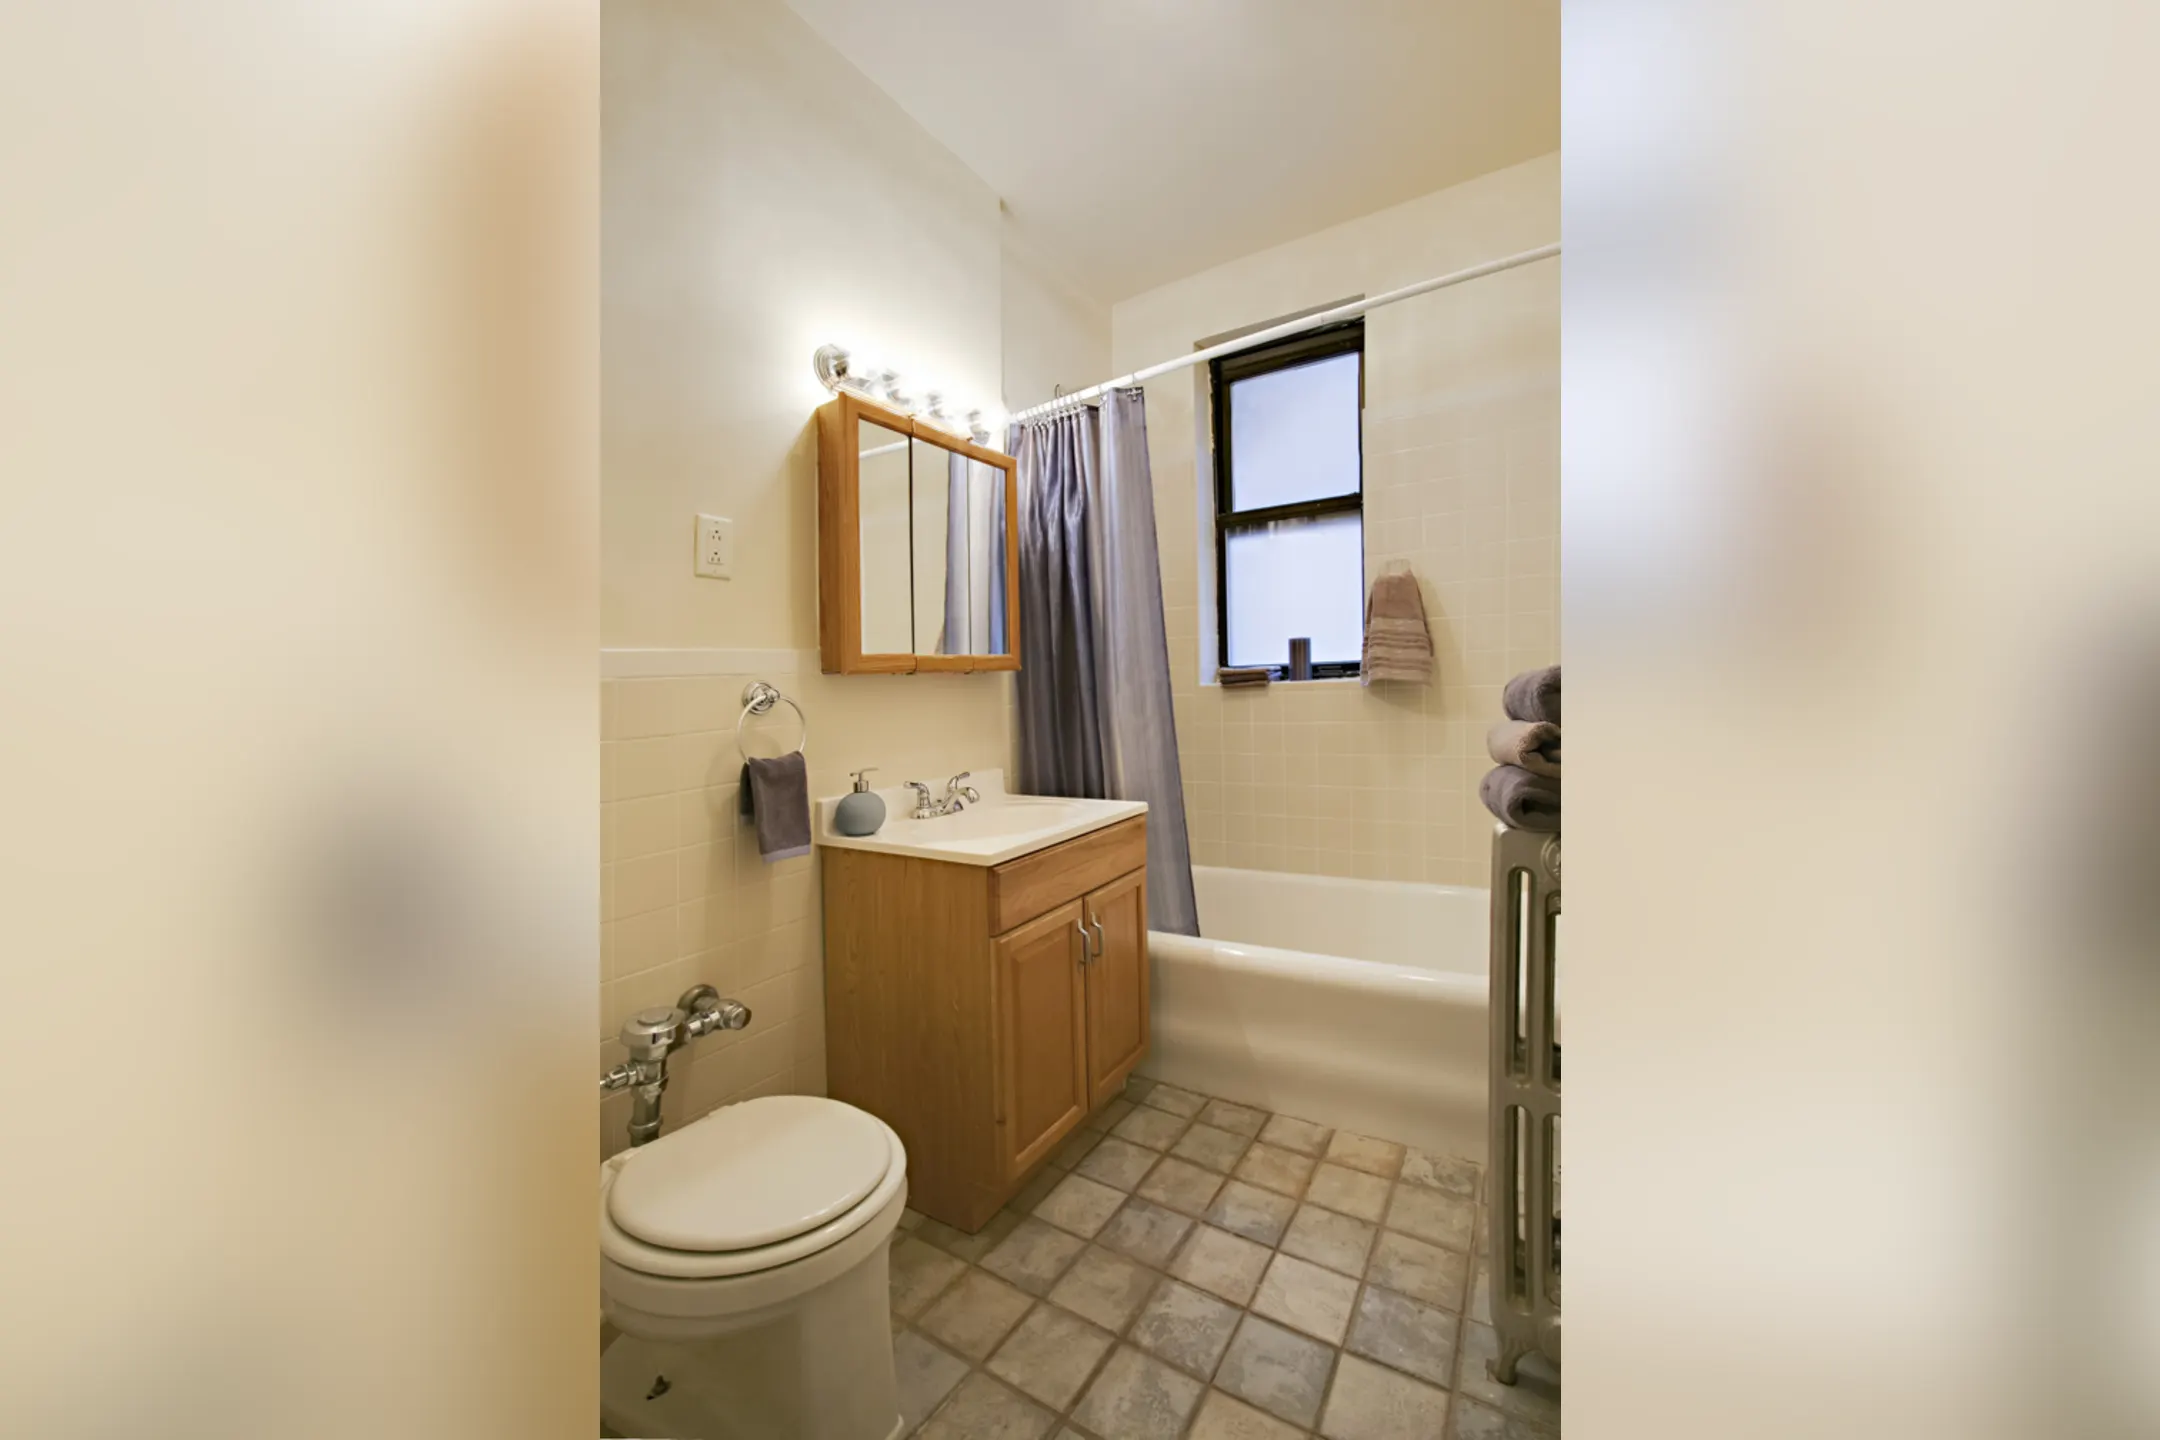 Bathroom - Beech Kearny Associates - Kearny, NJ